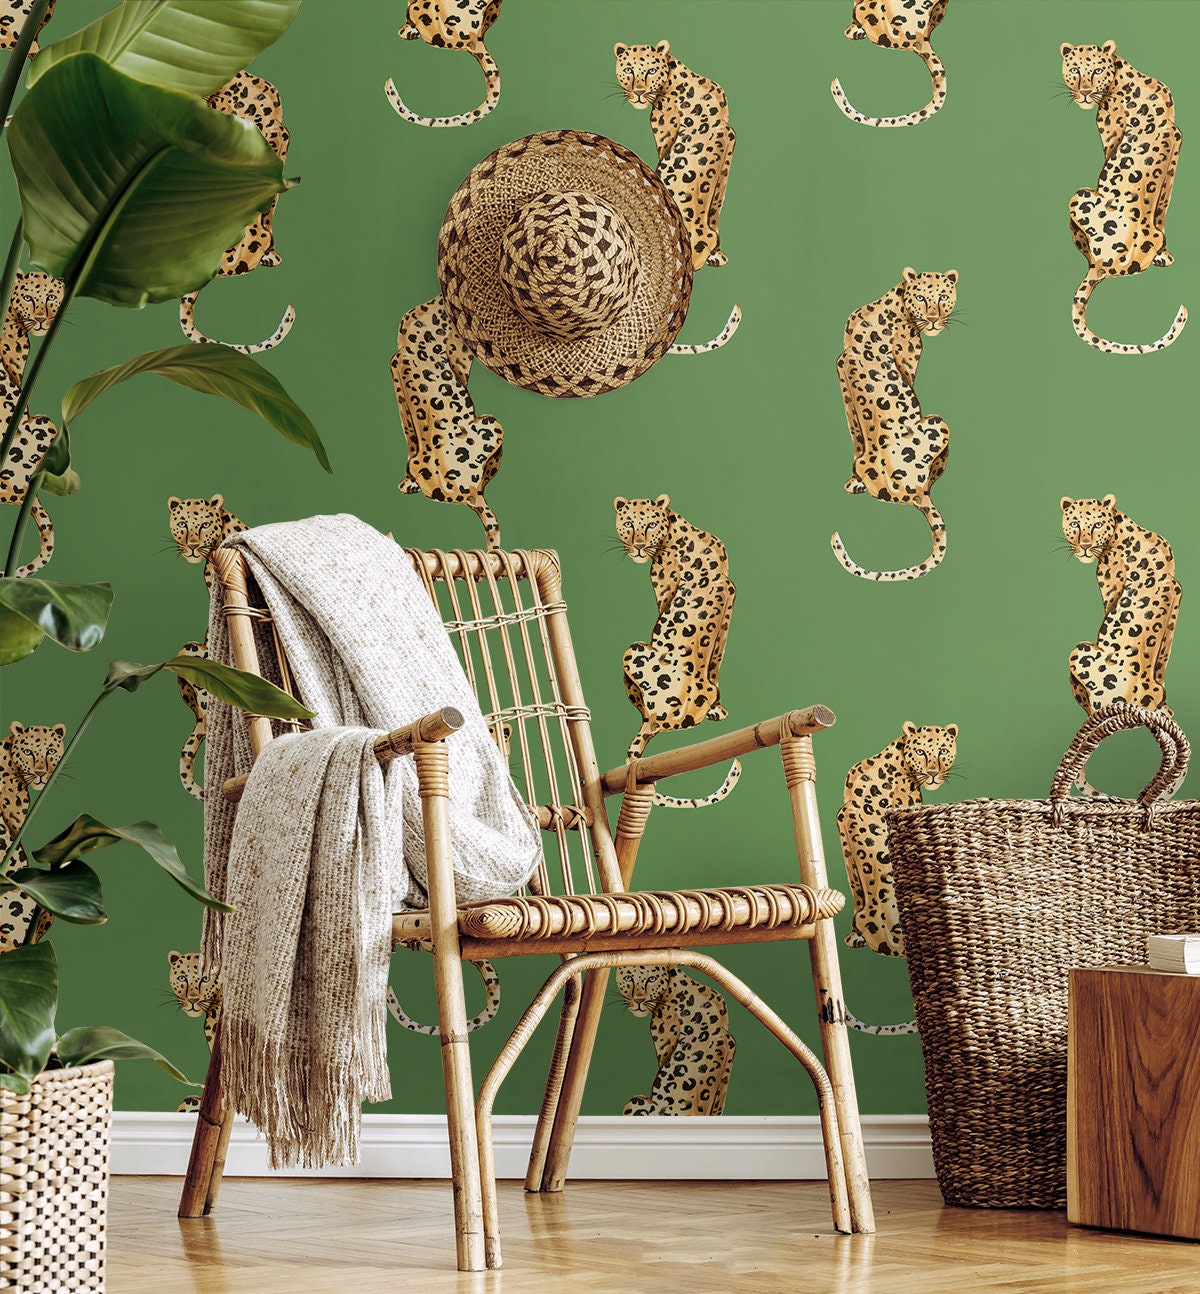 Leopard Print Peel and Stick Wallpaper Sample - 19′′x19′′